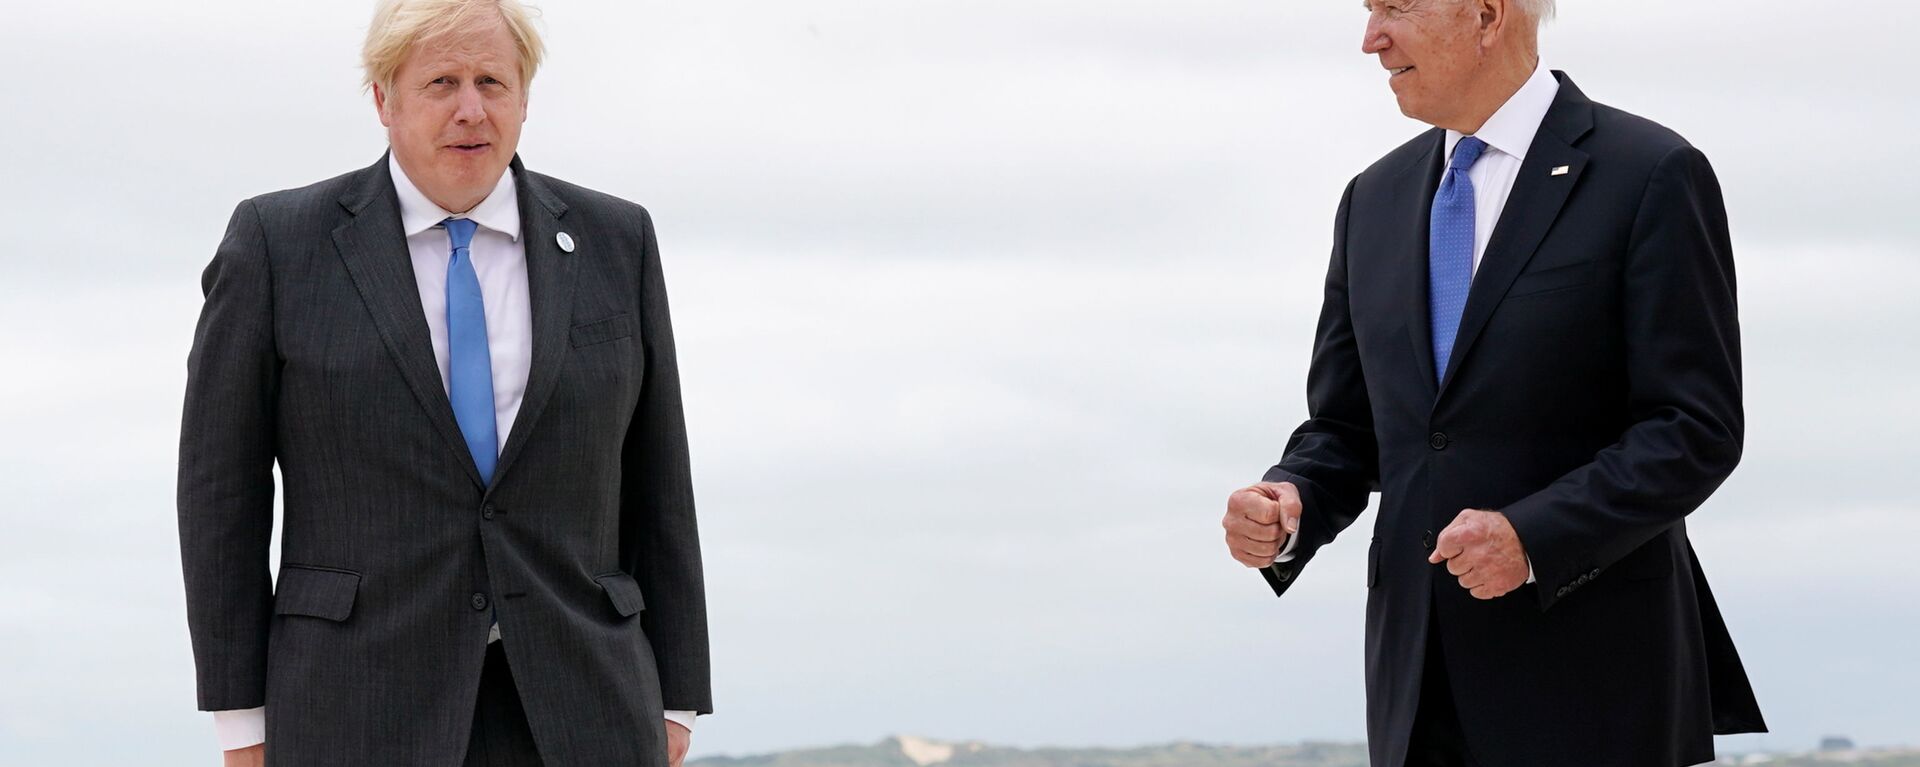 British Prime Minister Boris Johnson and U.S. President Joe Biden pose for photos at the G-7 summit, in Carbis Bay, Cornwall, Britain June 11, 2021 - Sputnik International, 1920